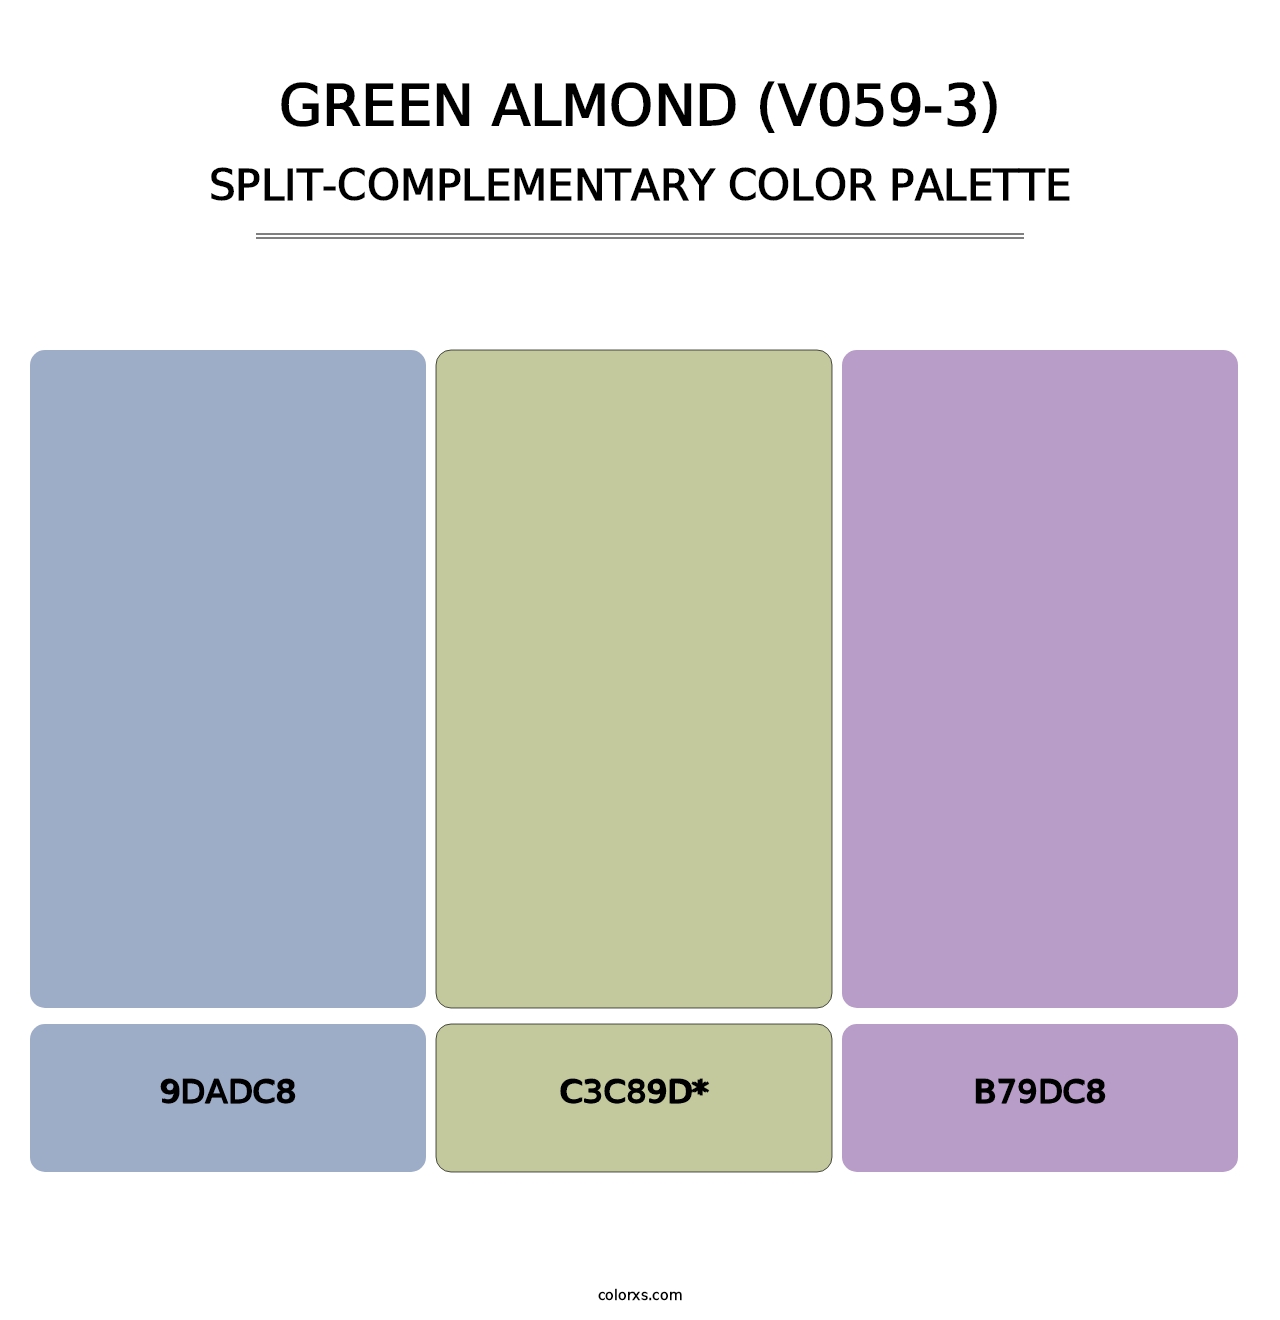 Green Almond (V059-3) - Split-Complementary Color Palette